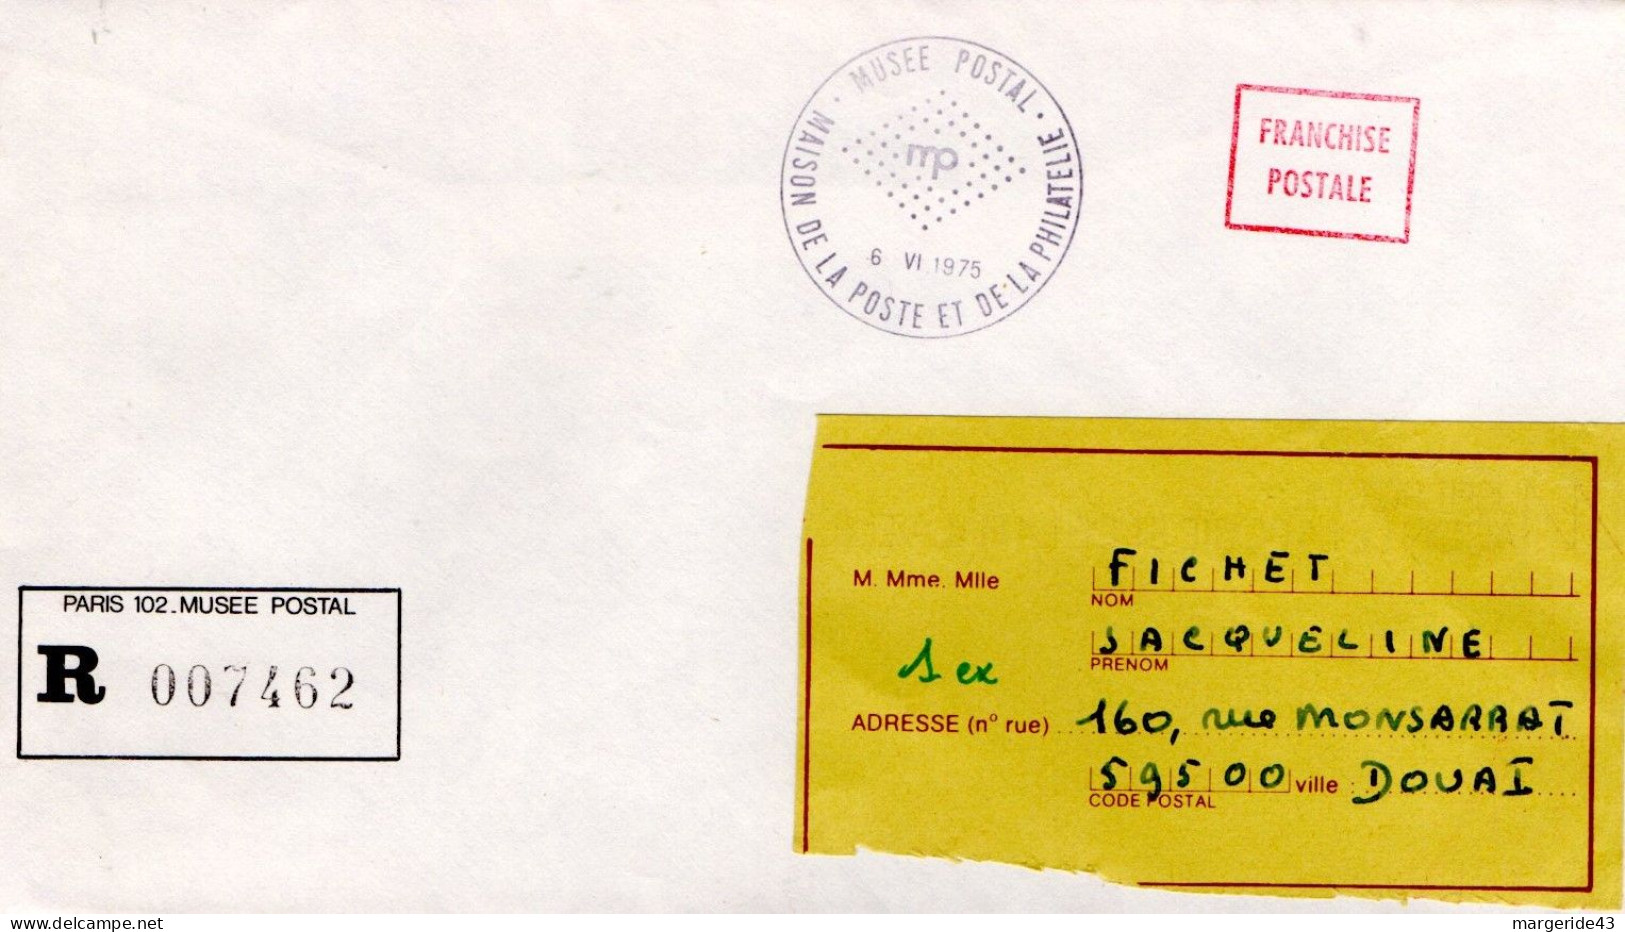 LETTRE EN FRANCHISE POSTALE EN......RECOMMANDEE DE PARIS 102 MUSEE POSTAL 1975 - Tarifas Postales